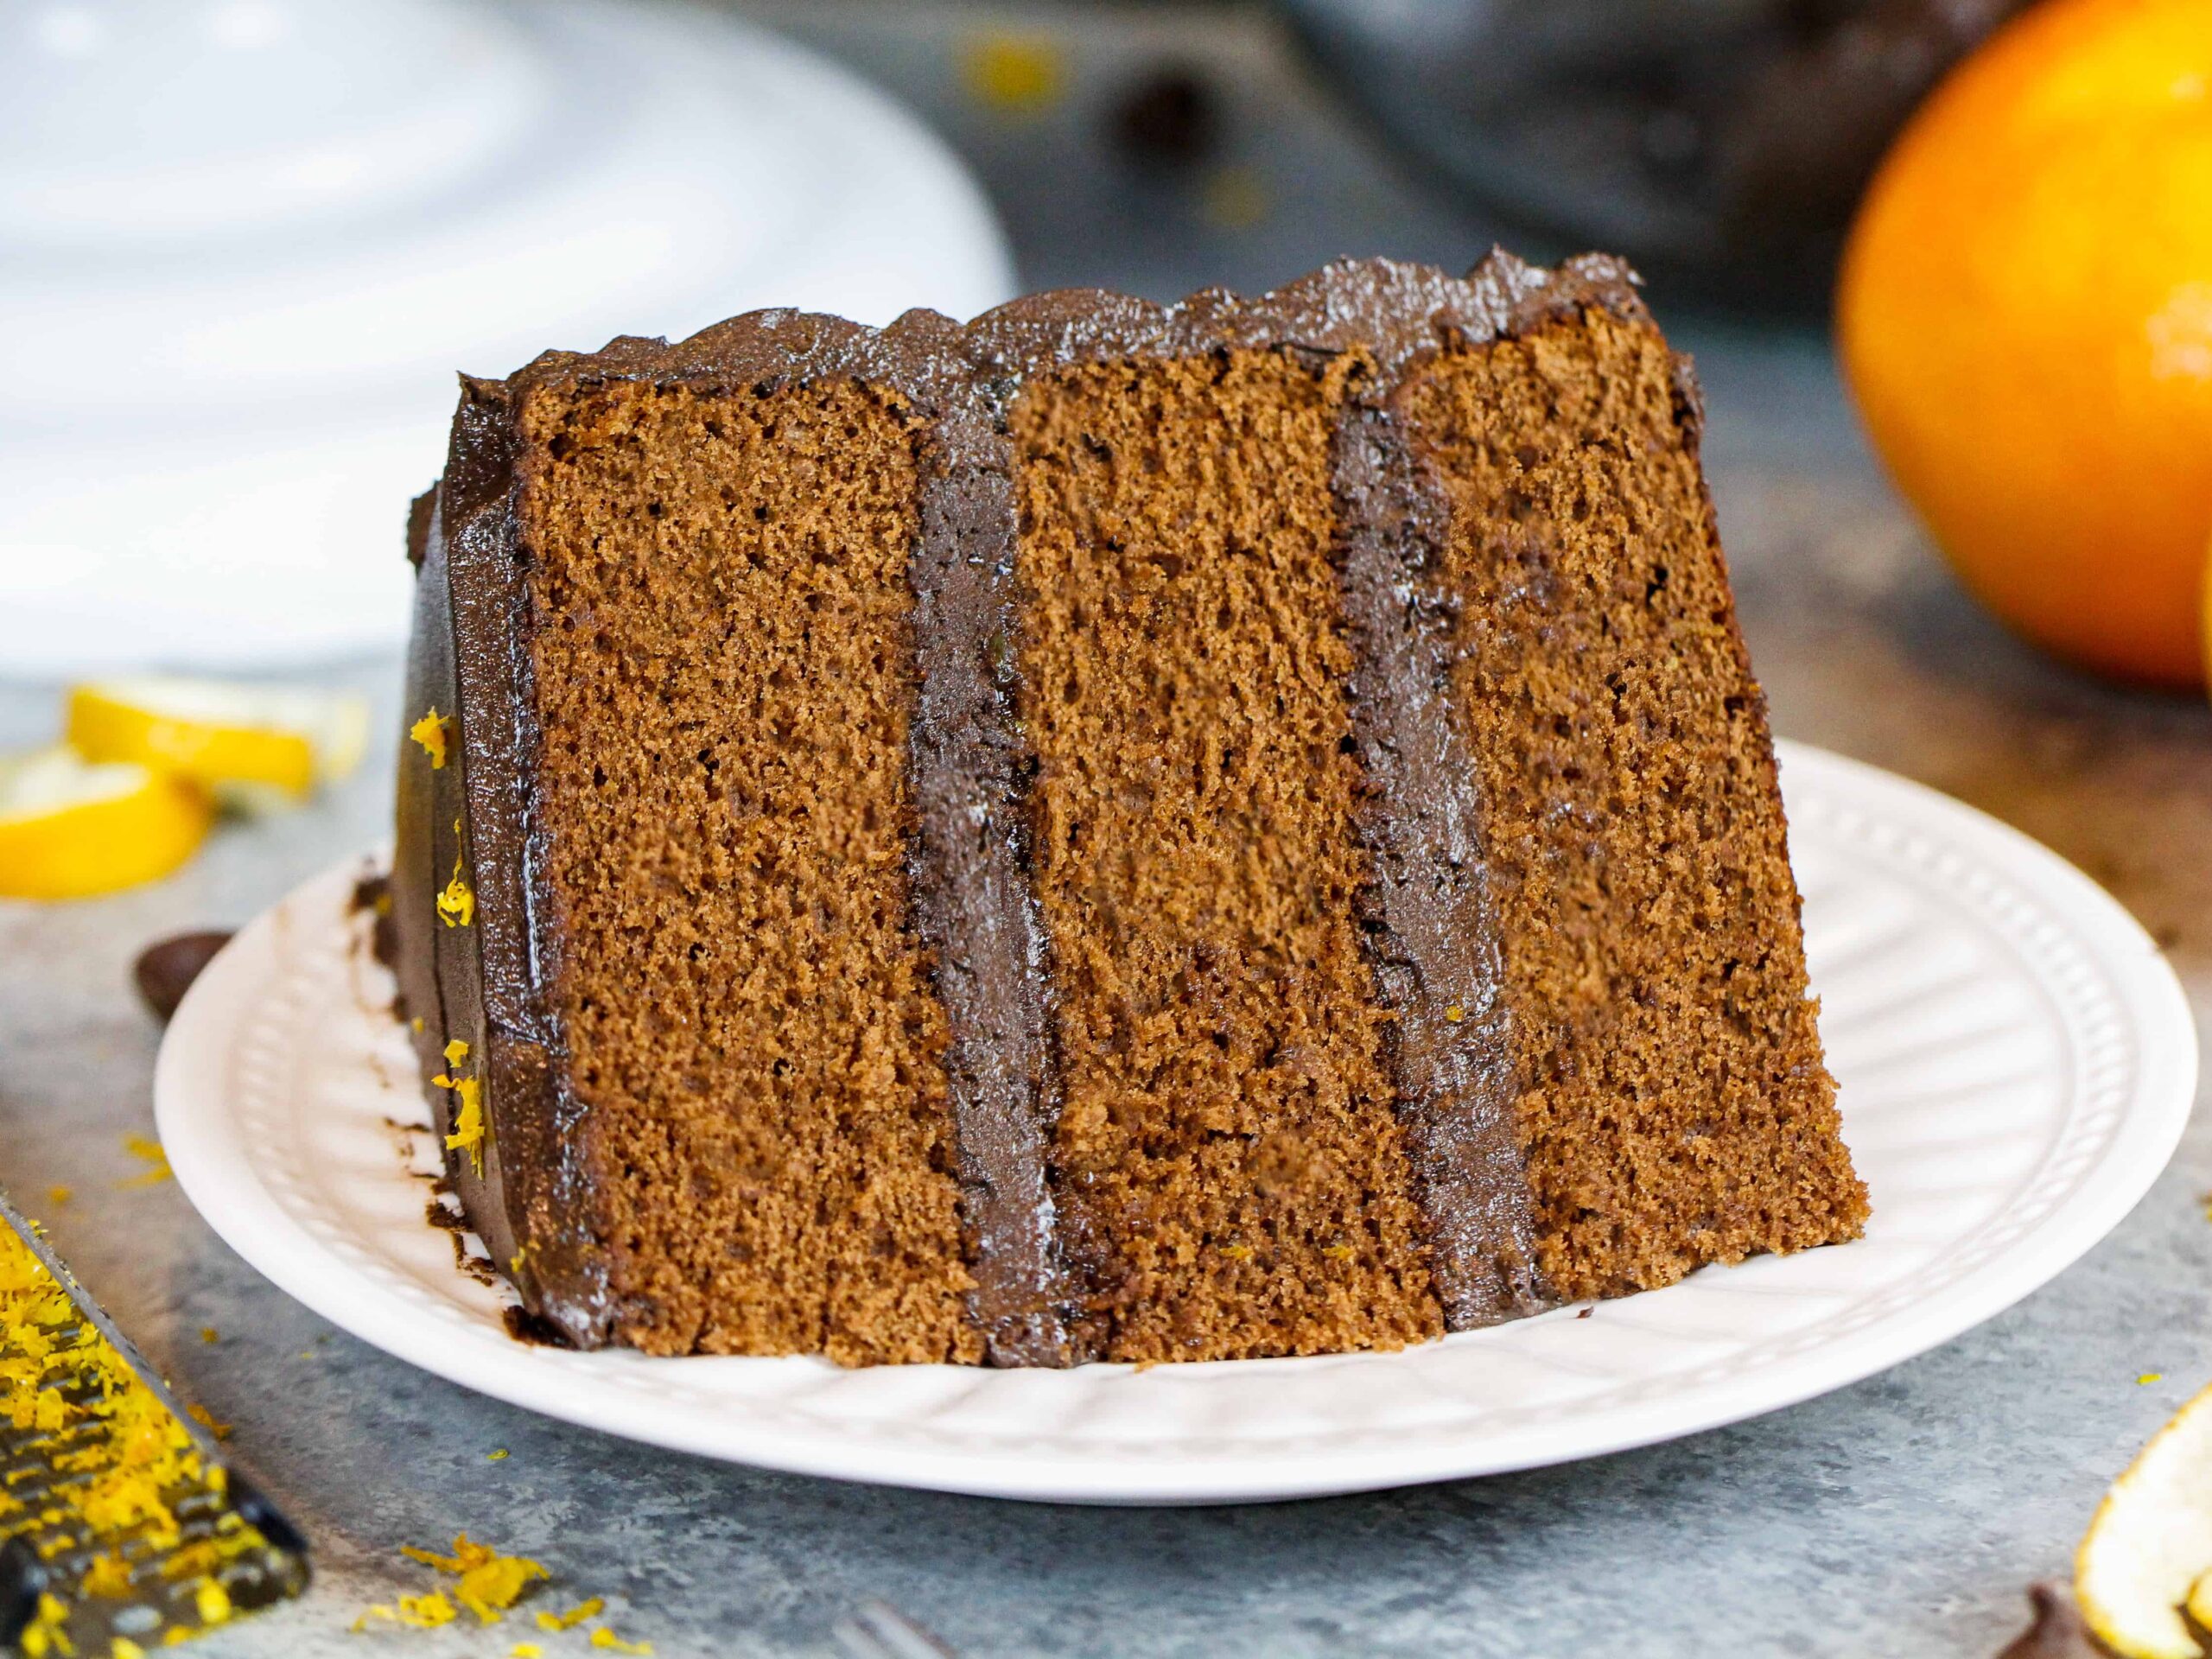 image of a plated slice of orange chocolate cake